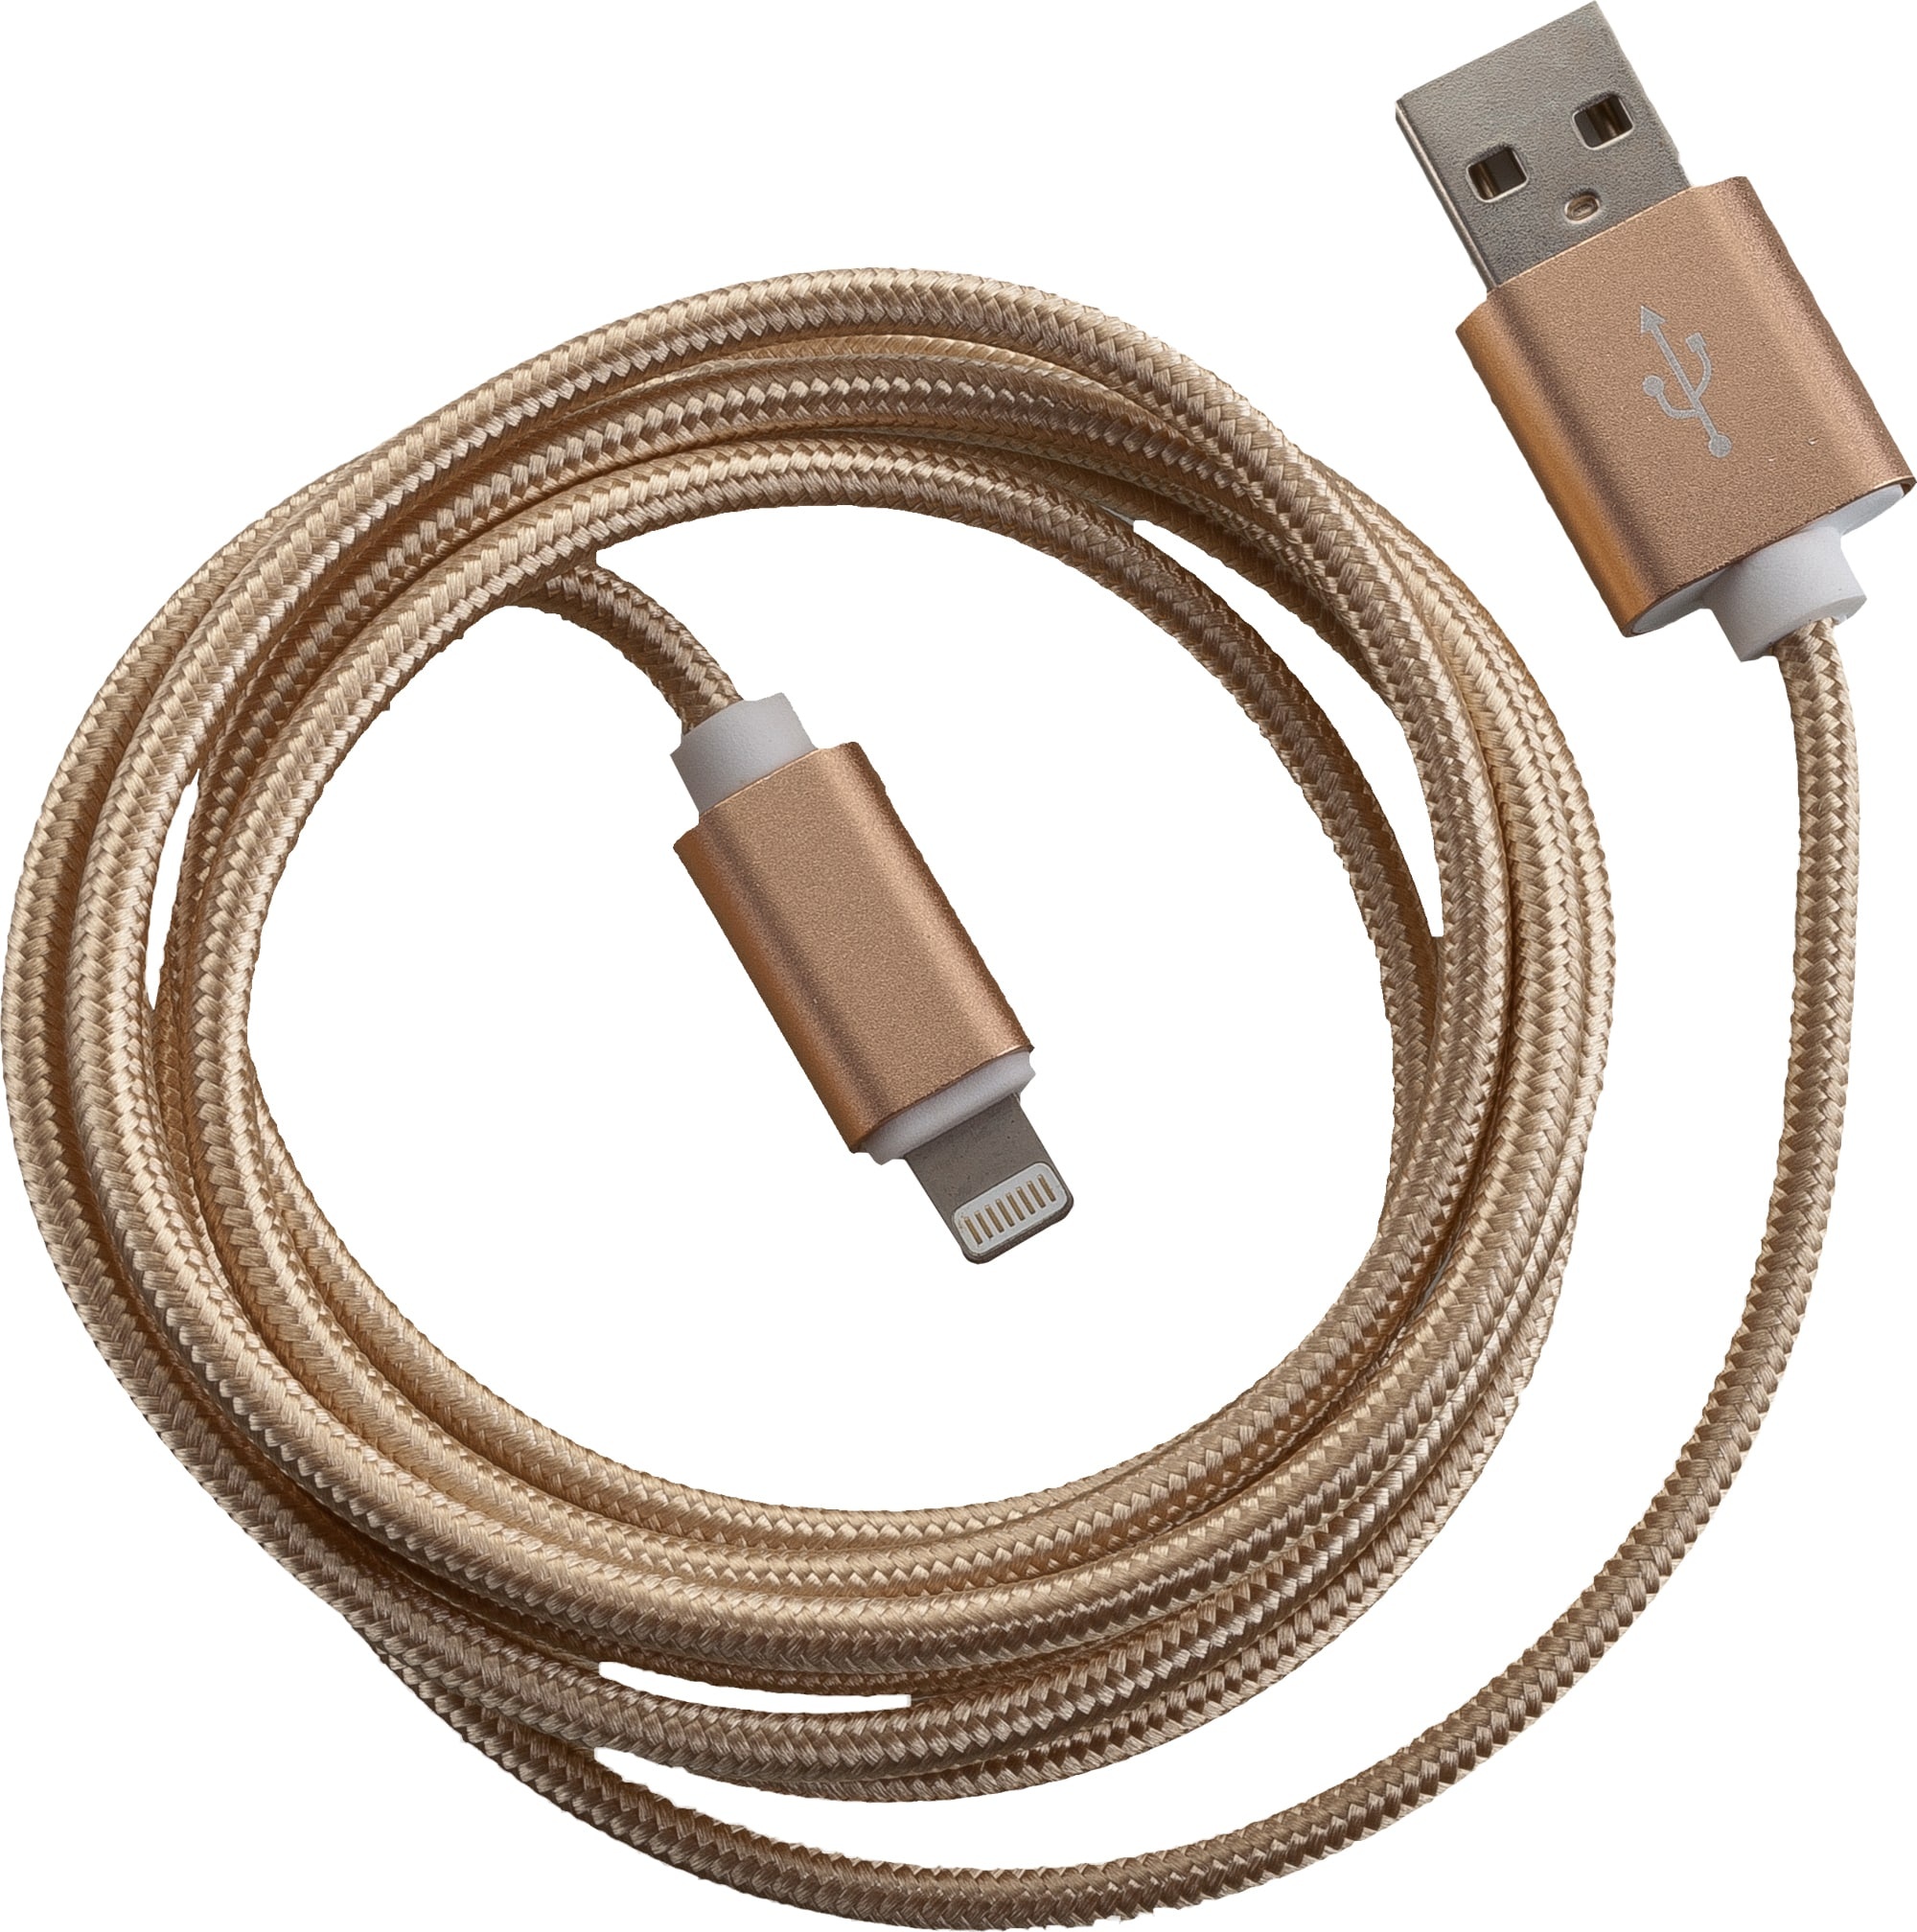 Peter Jäckel FASHION 1,5m USB Data Cable Gold für Apple Lightning mit Sync- und Ladefunktion (1.50 m, USB 2.0), USB Kabel